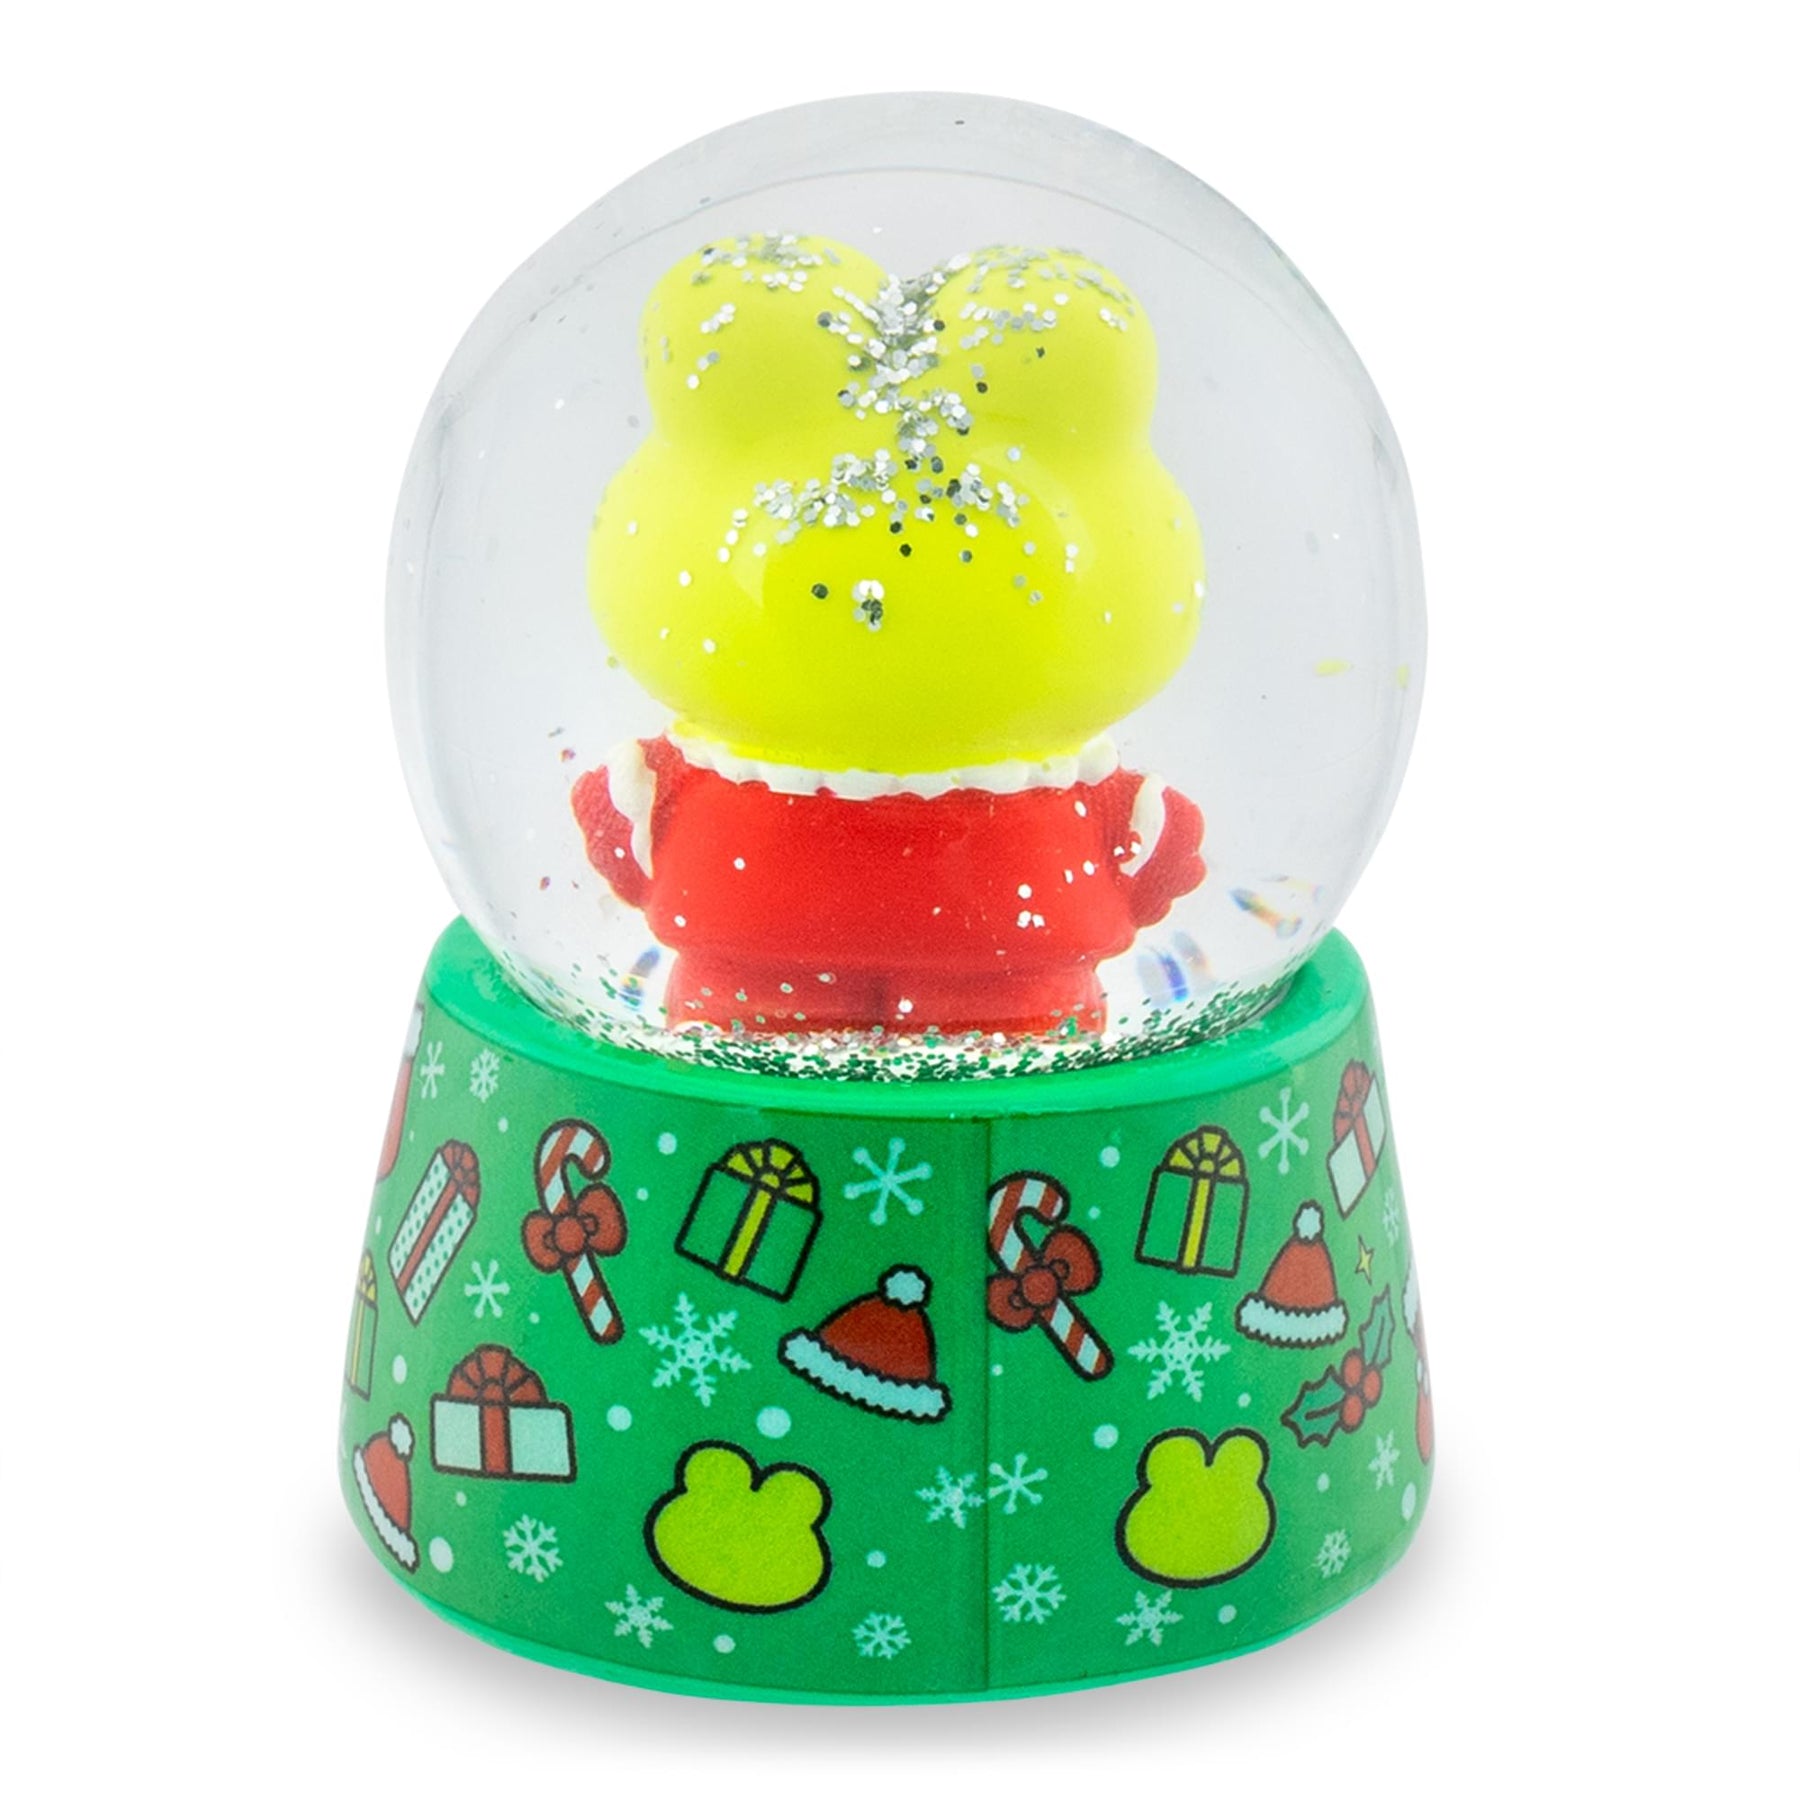 Sanrio Keroppi Holiday Mini Snow Globe | 3 Inches Tall